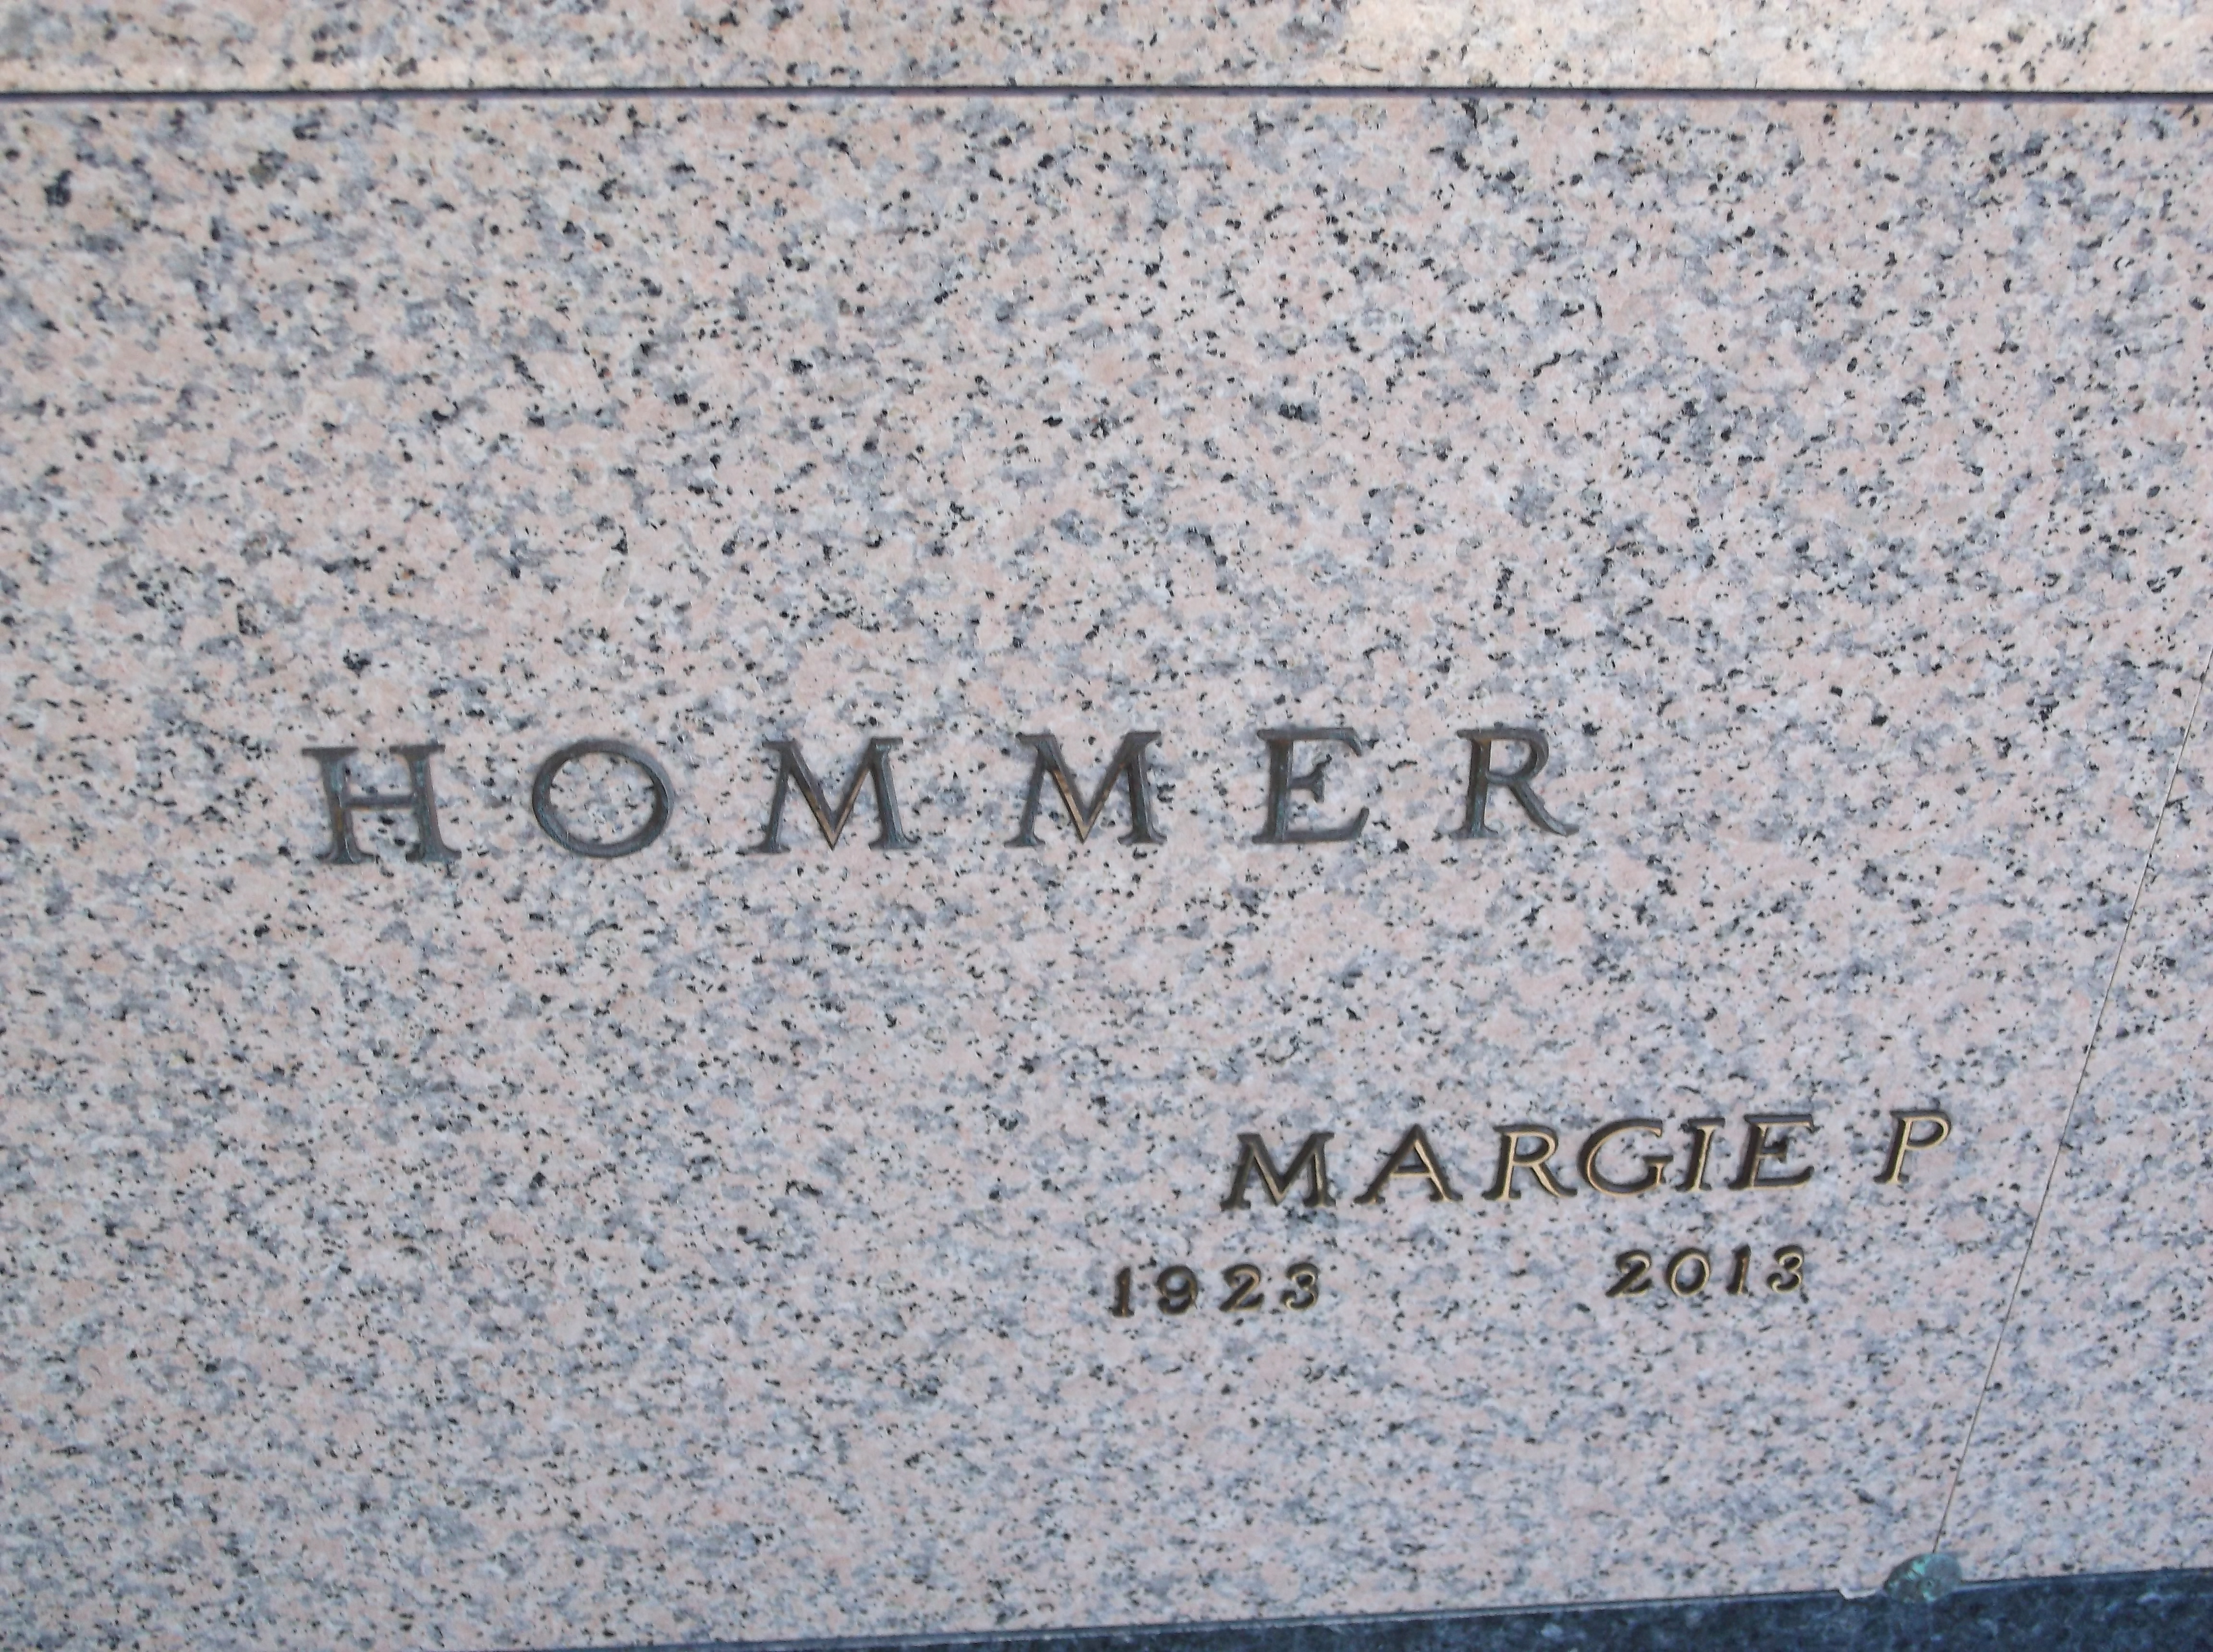 Margie P Hommer